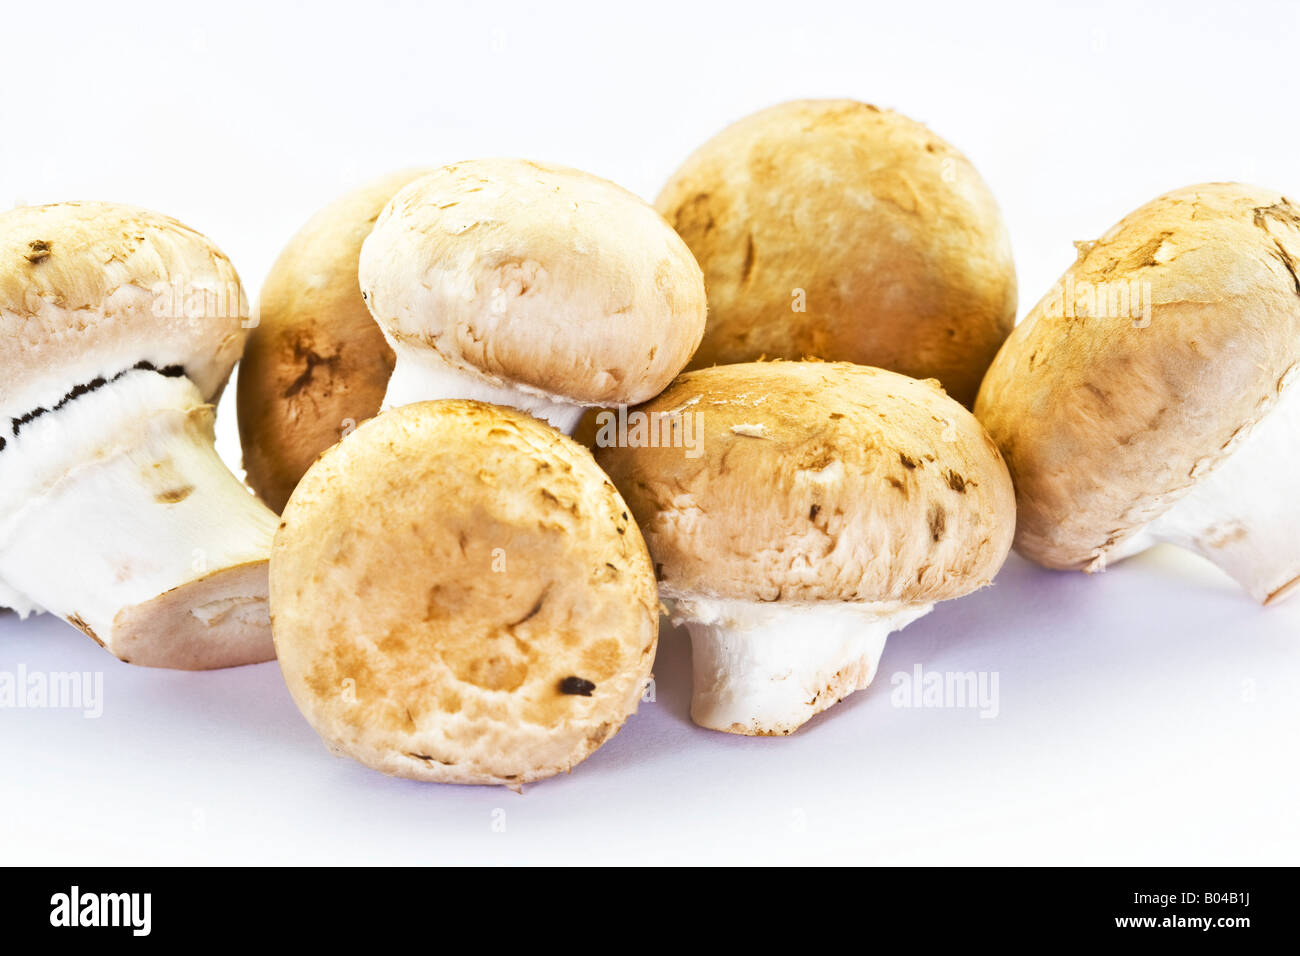 Fresh mushrooms on a white surface Stock Photo